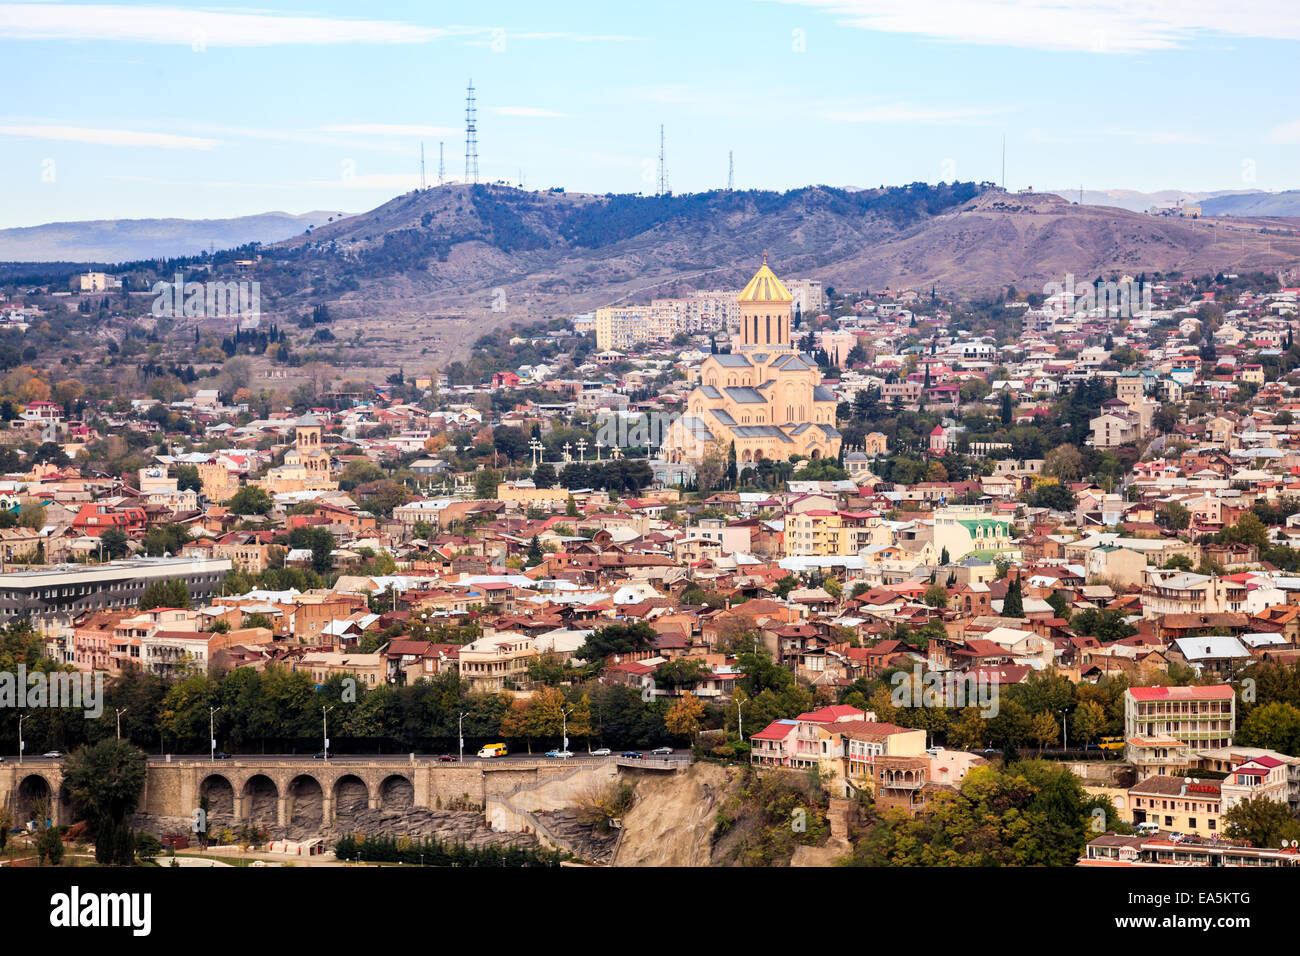 Vista aérea de la ciudad de Tbilisi, capital de Georgia Foto de stock